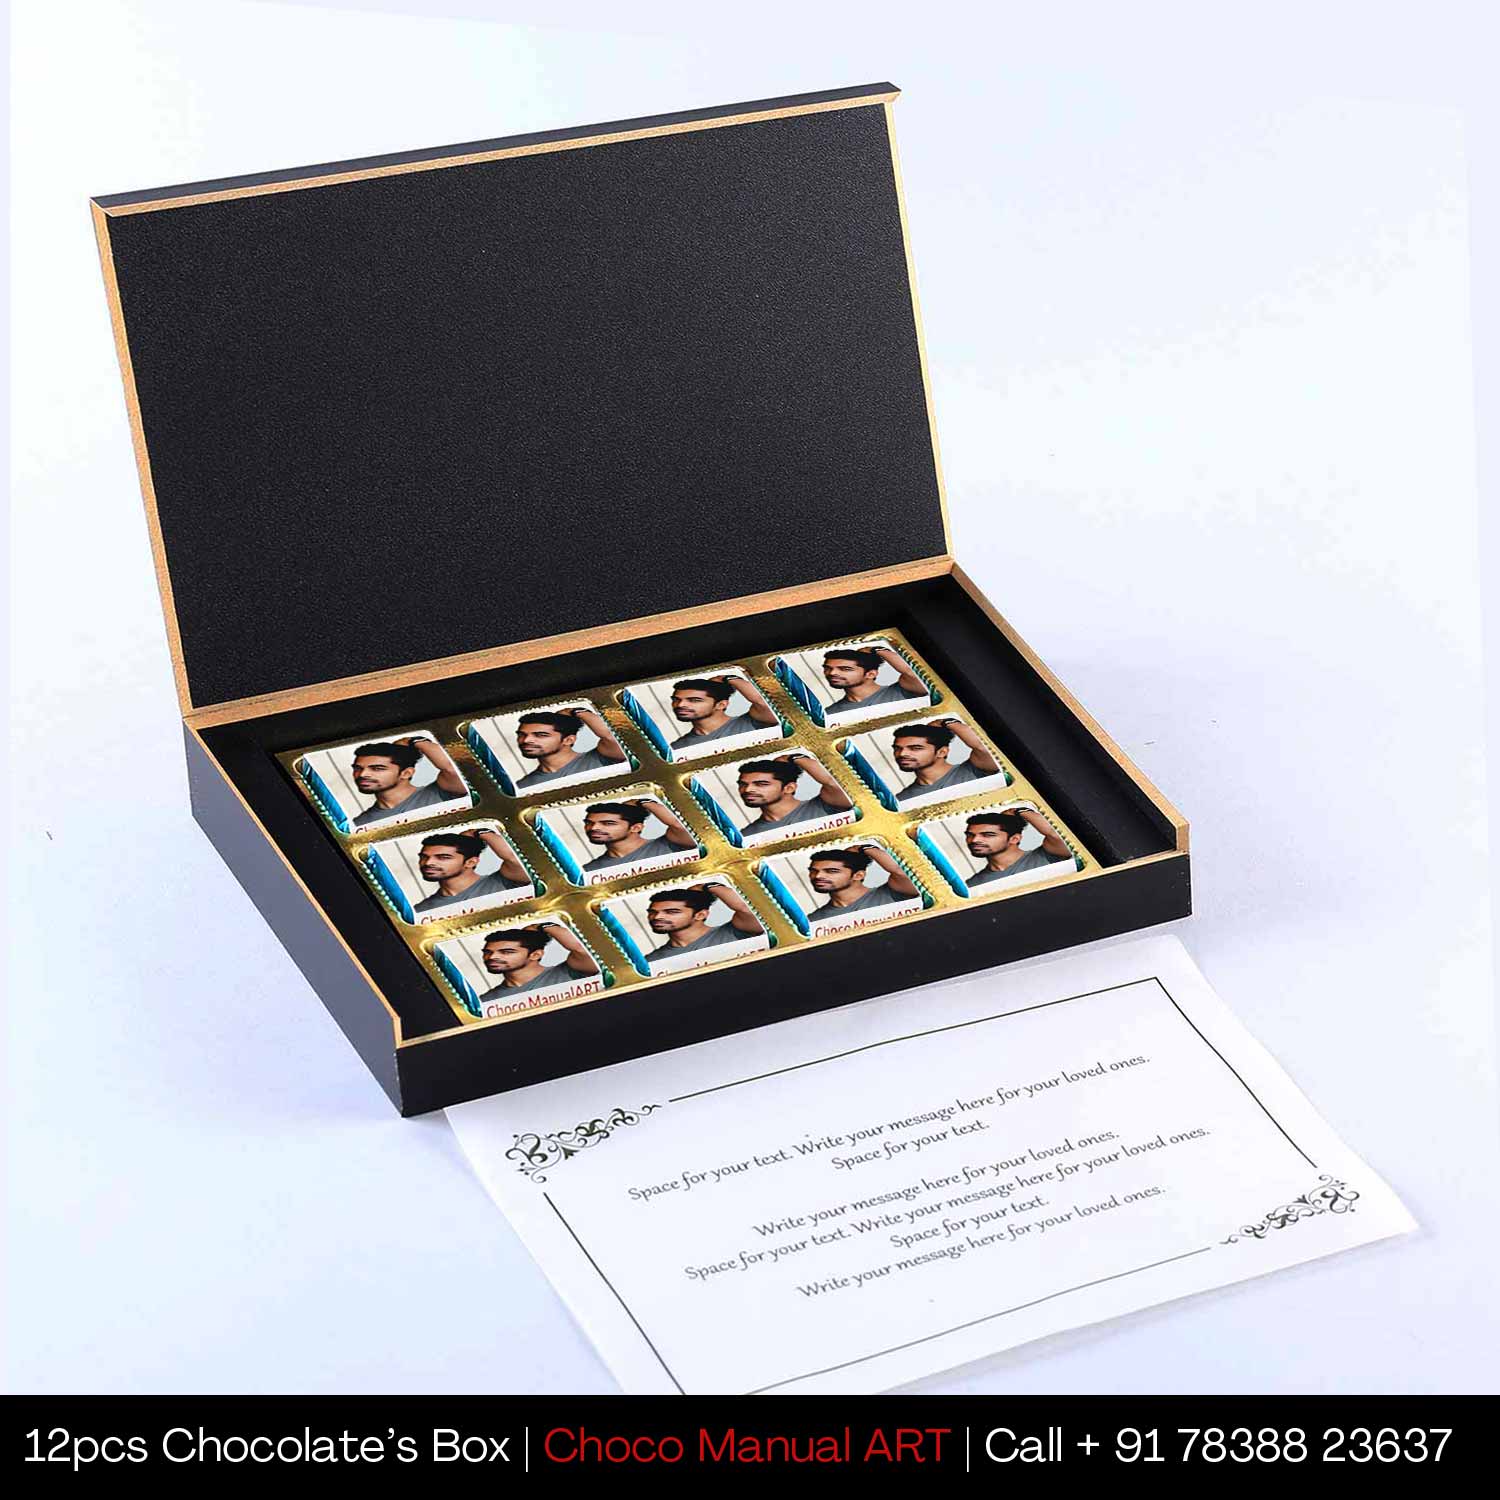 Thank you gift Chocolates I  Delicious chocolates I  Image/Name printed chocolate box I  Elegant wooden packaging I  Free shipping across India